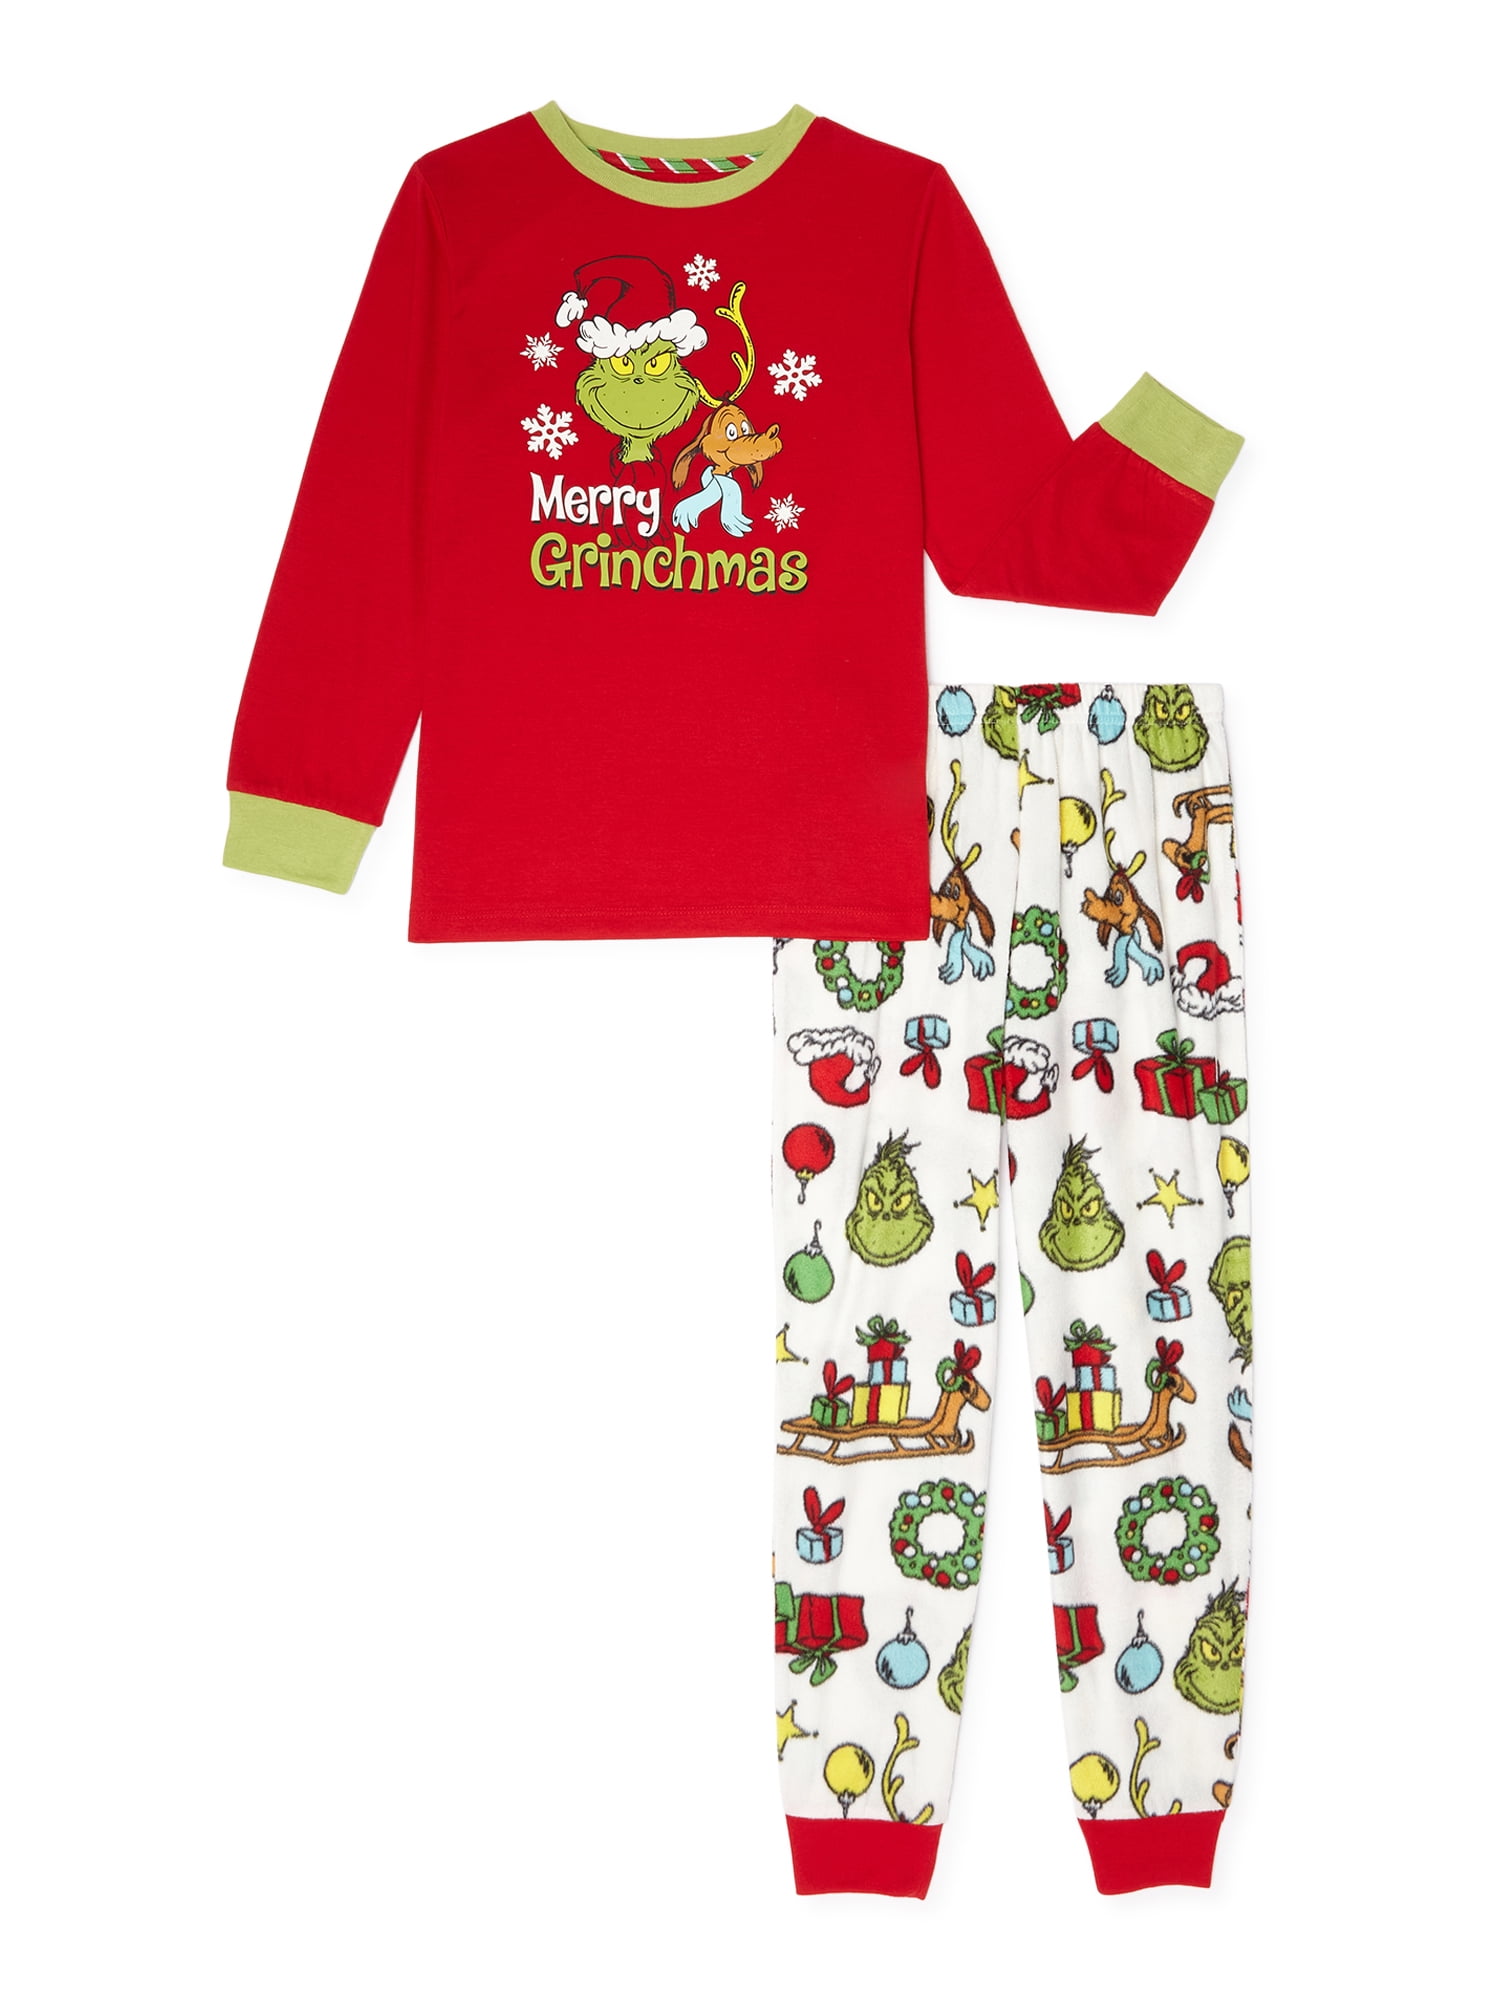 New Toddler 2 Piece Pajama Set Long Sleeve Pajama Feliz Navidad 18 Months